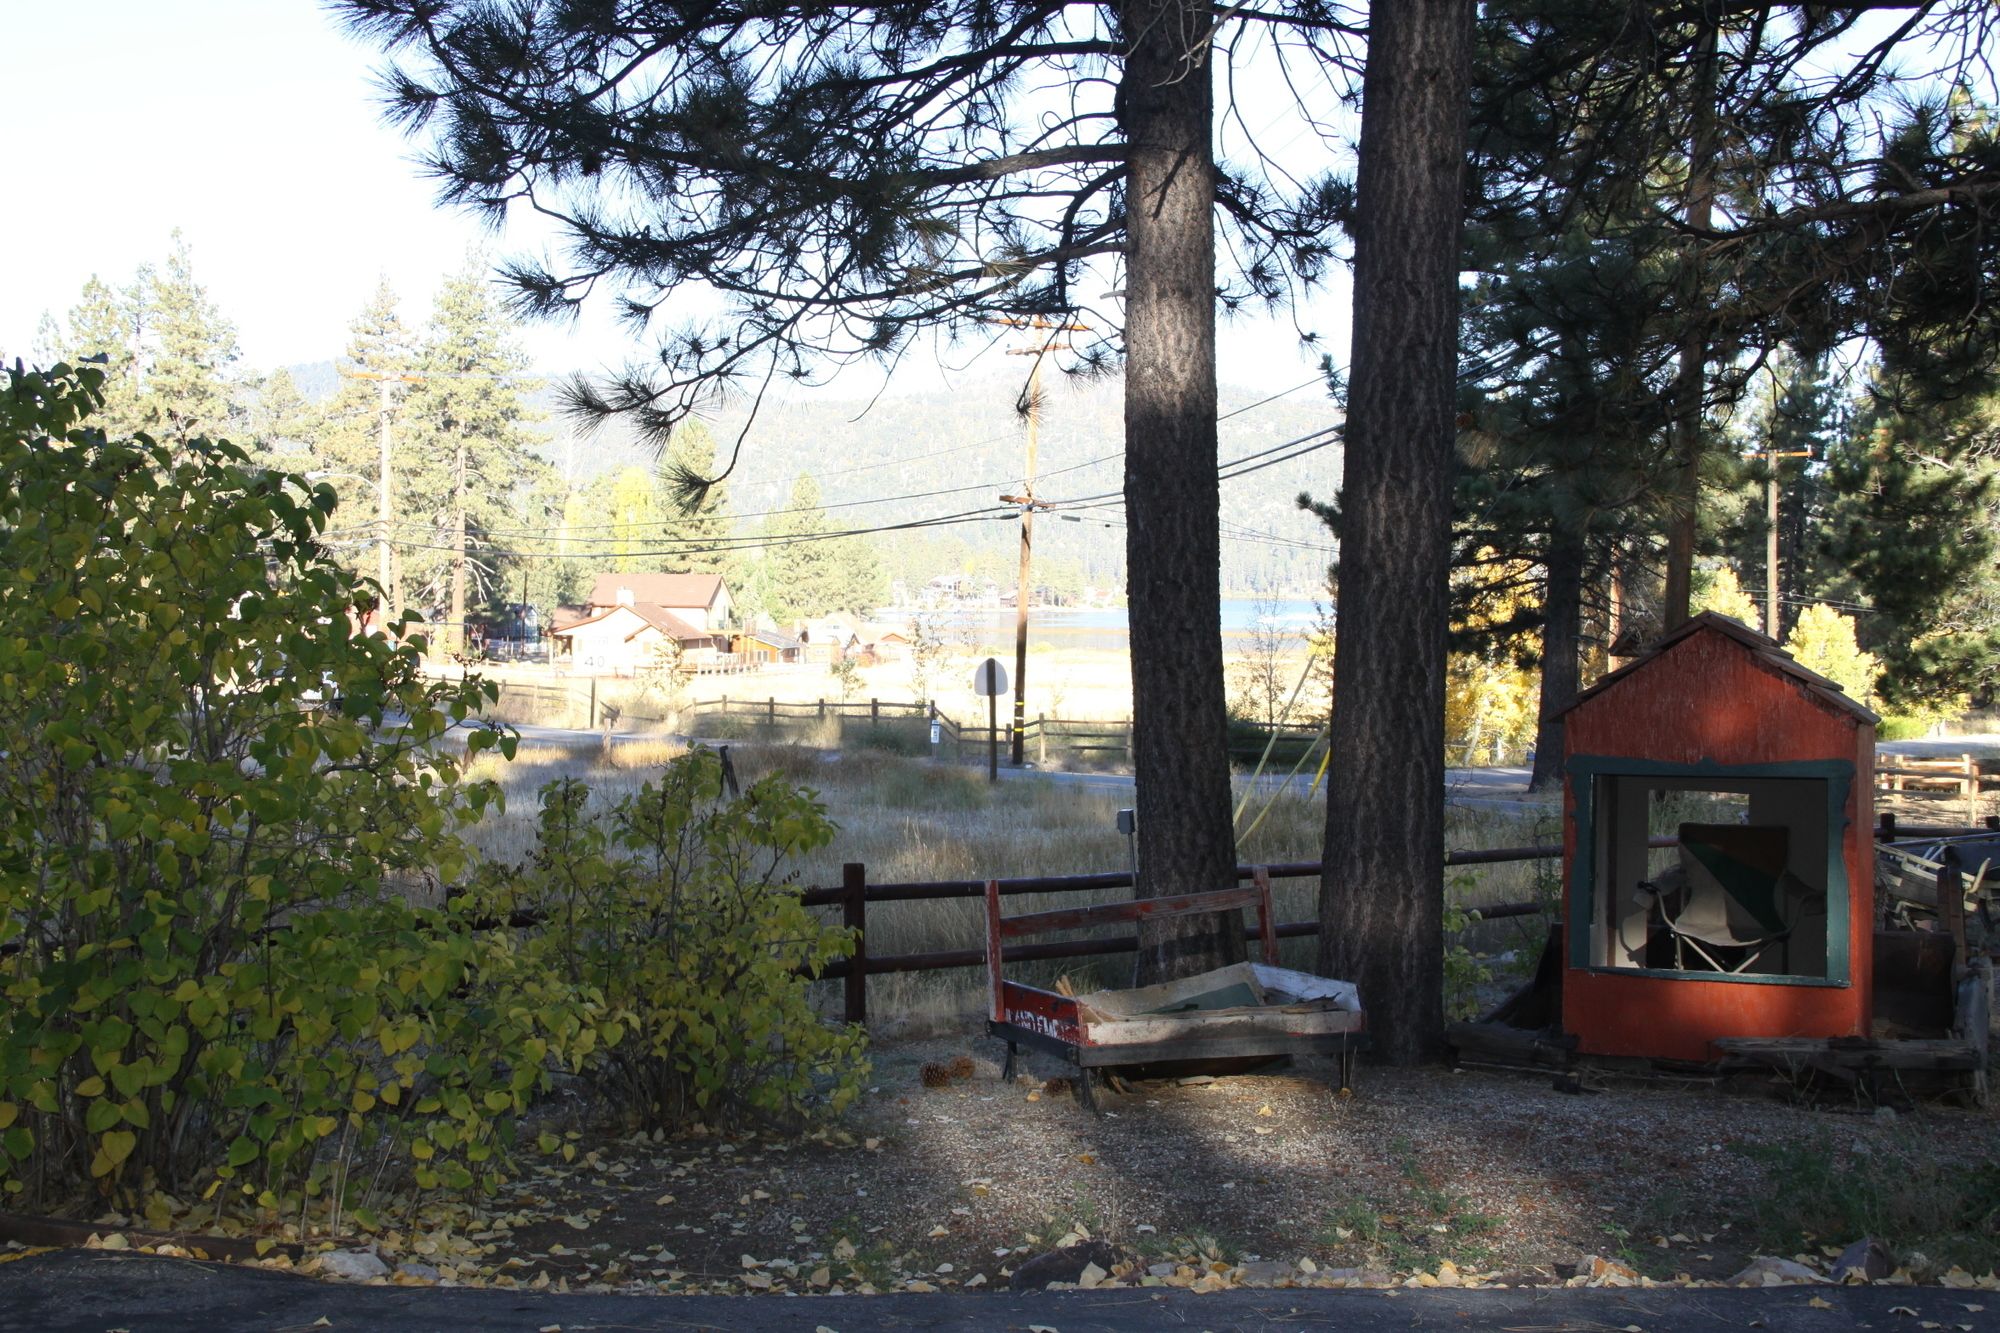 The Timberline Lodge